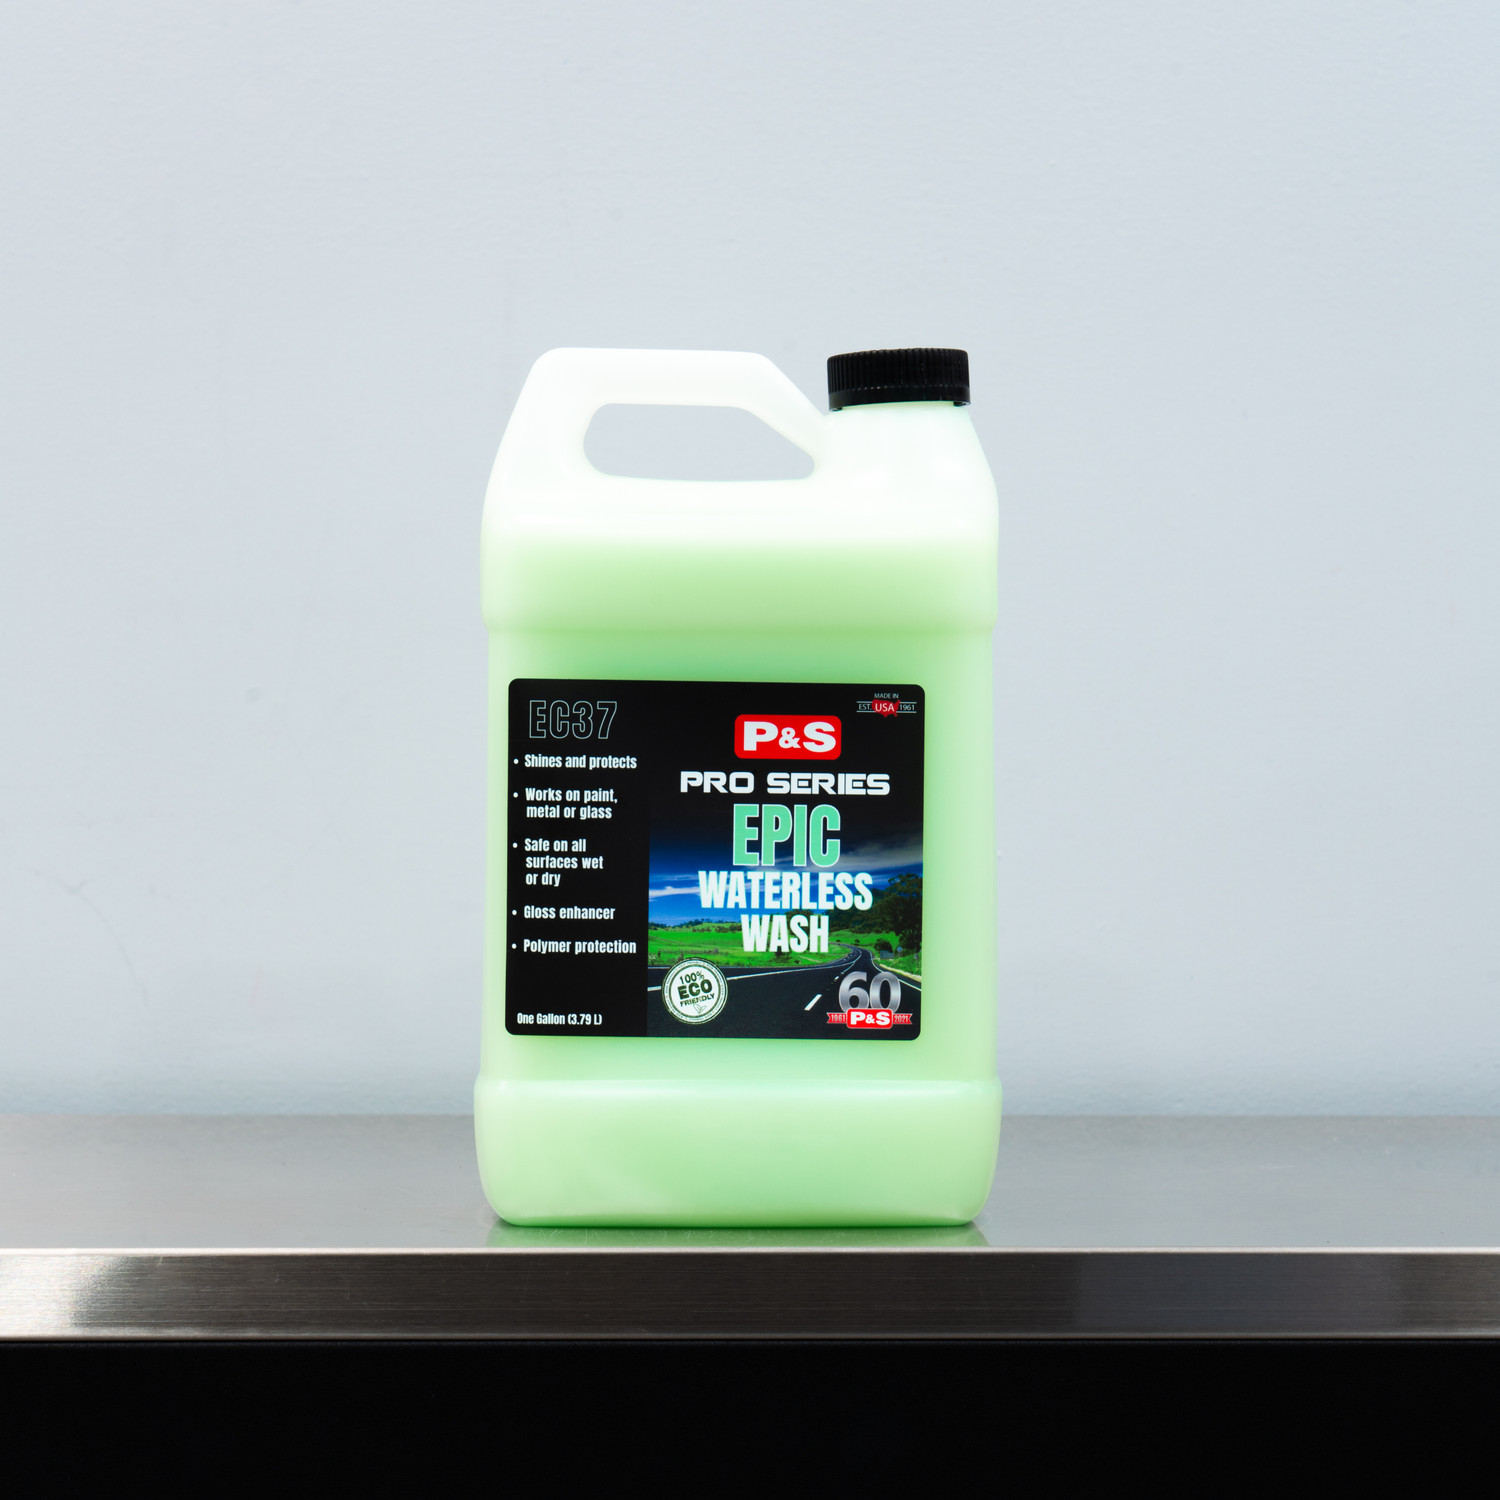 P&S Paint Gloss Quick Detail Spray, Surface Prep Lubricant, Wax Enhancer